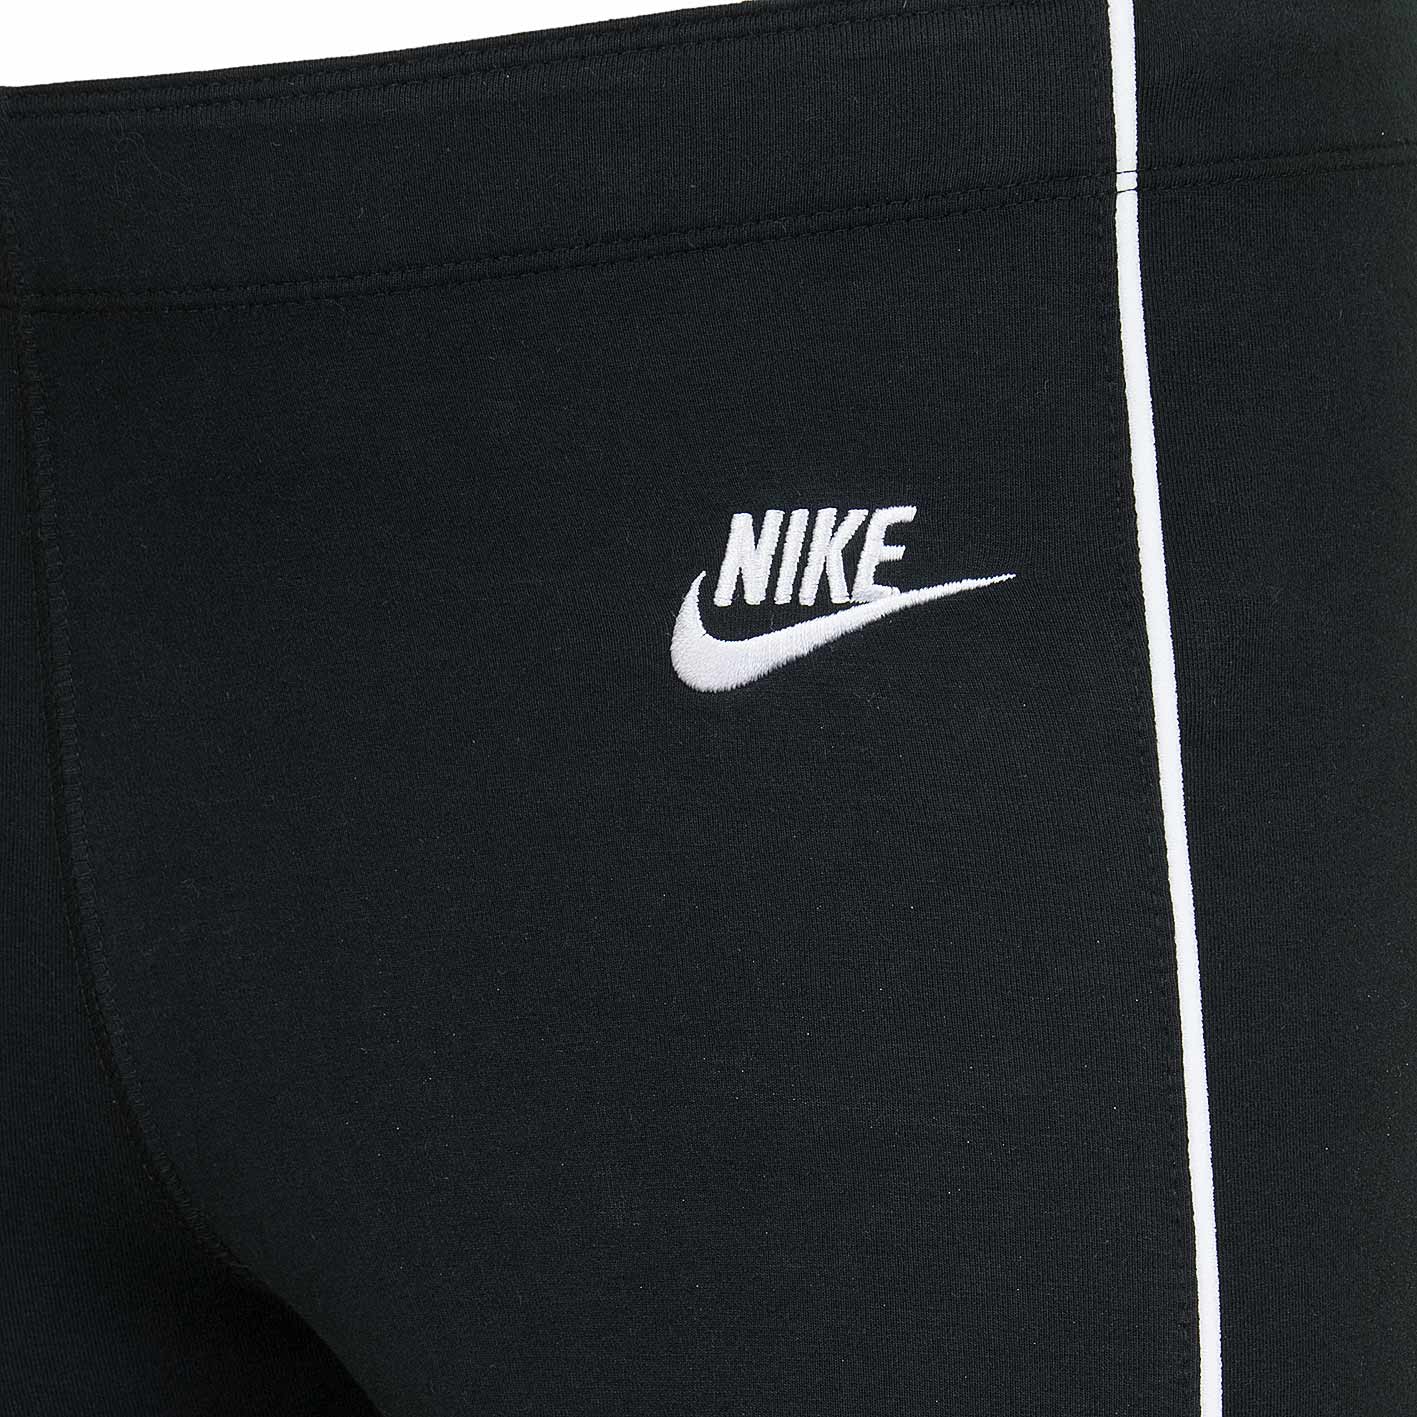 ☆ Nike Leggings Heritage schwarz/weiß - hier bestellen!